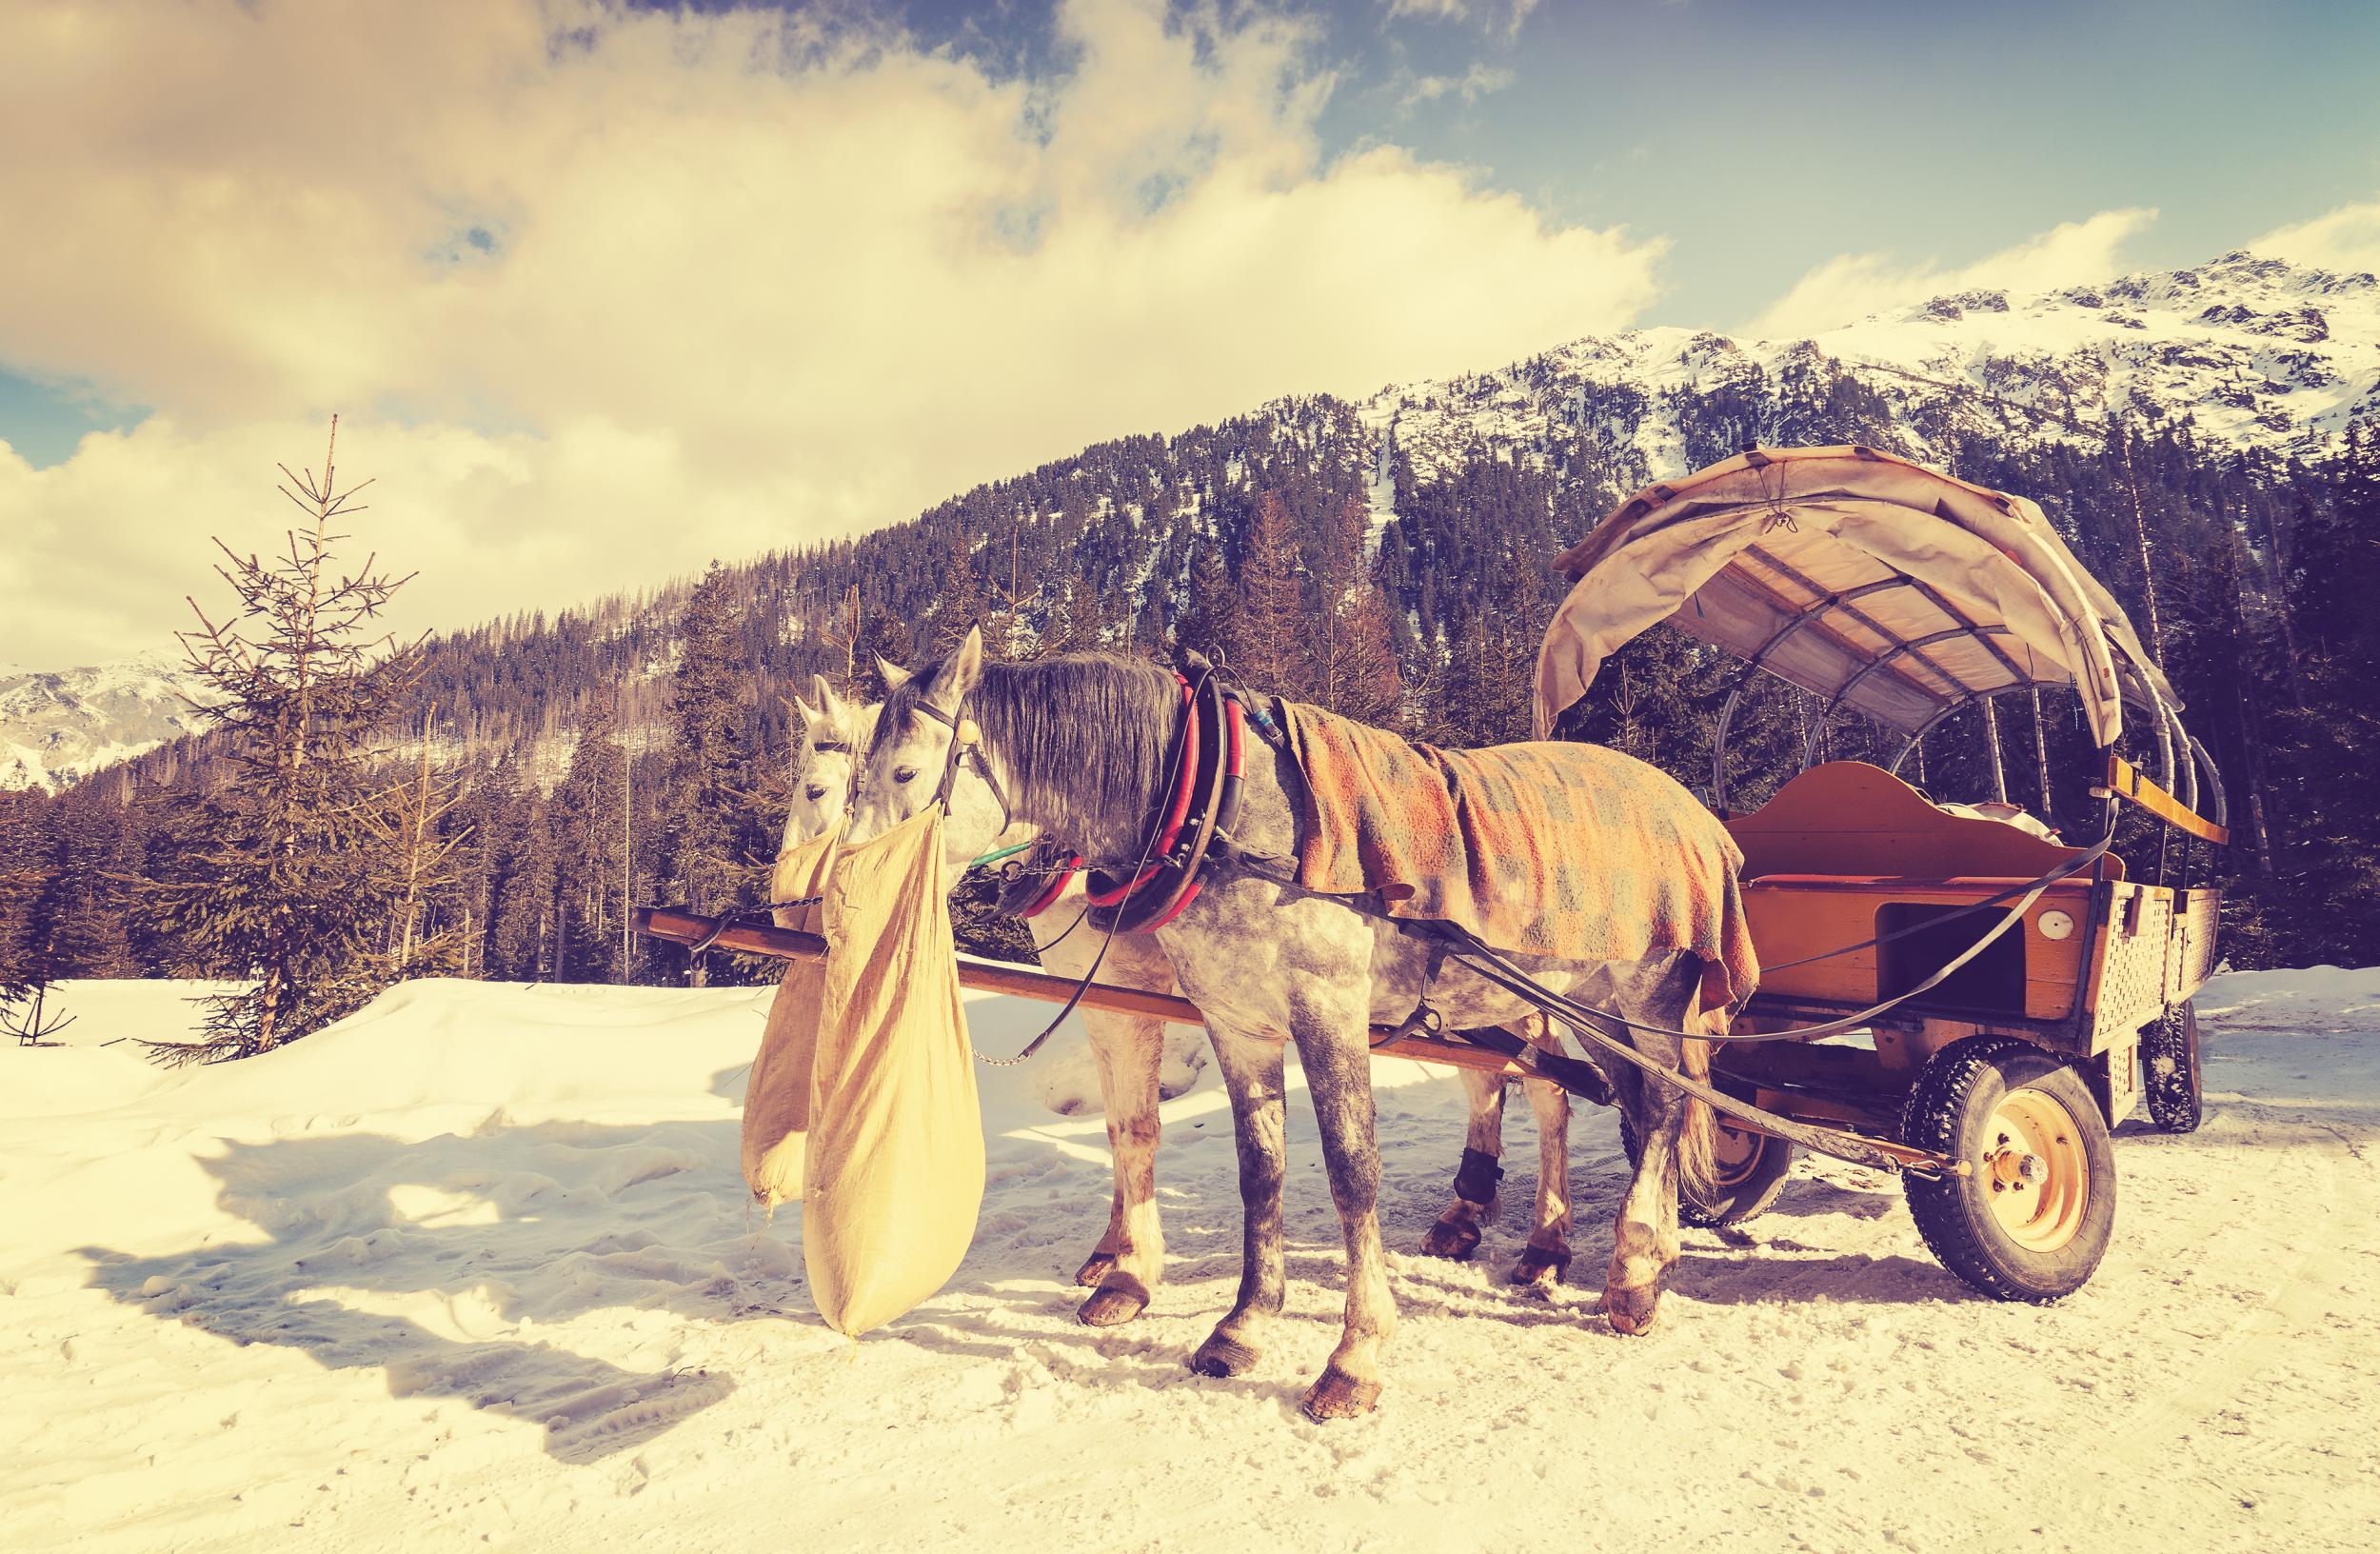 A horse-drawn carriage ride is standard in Zakopane